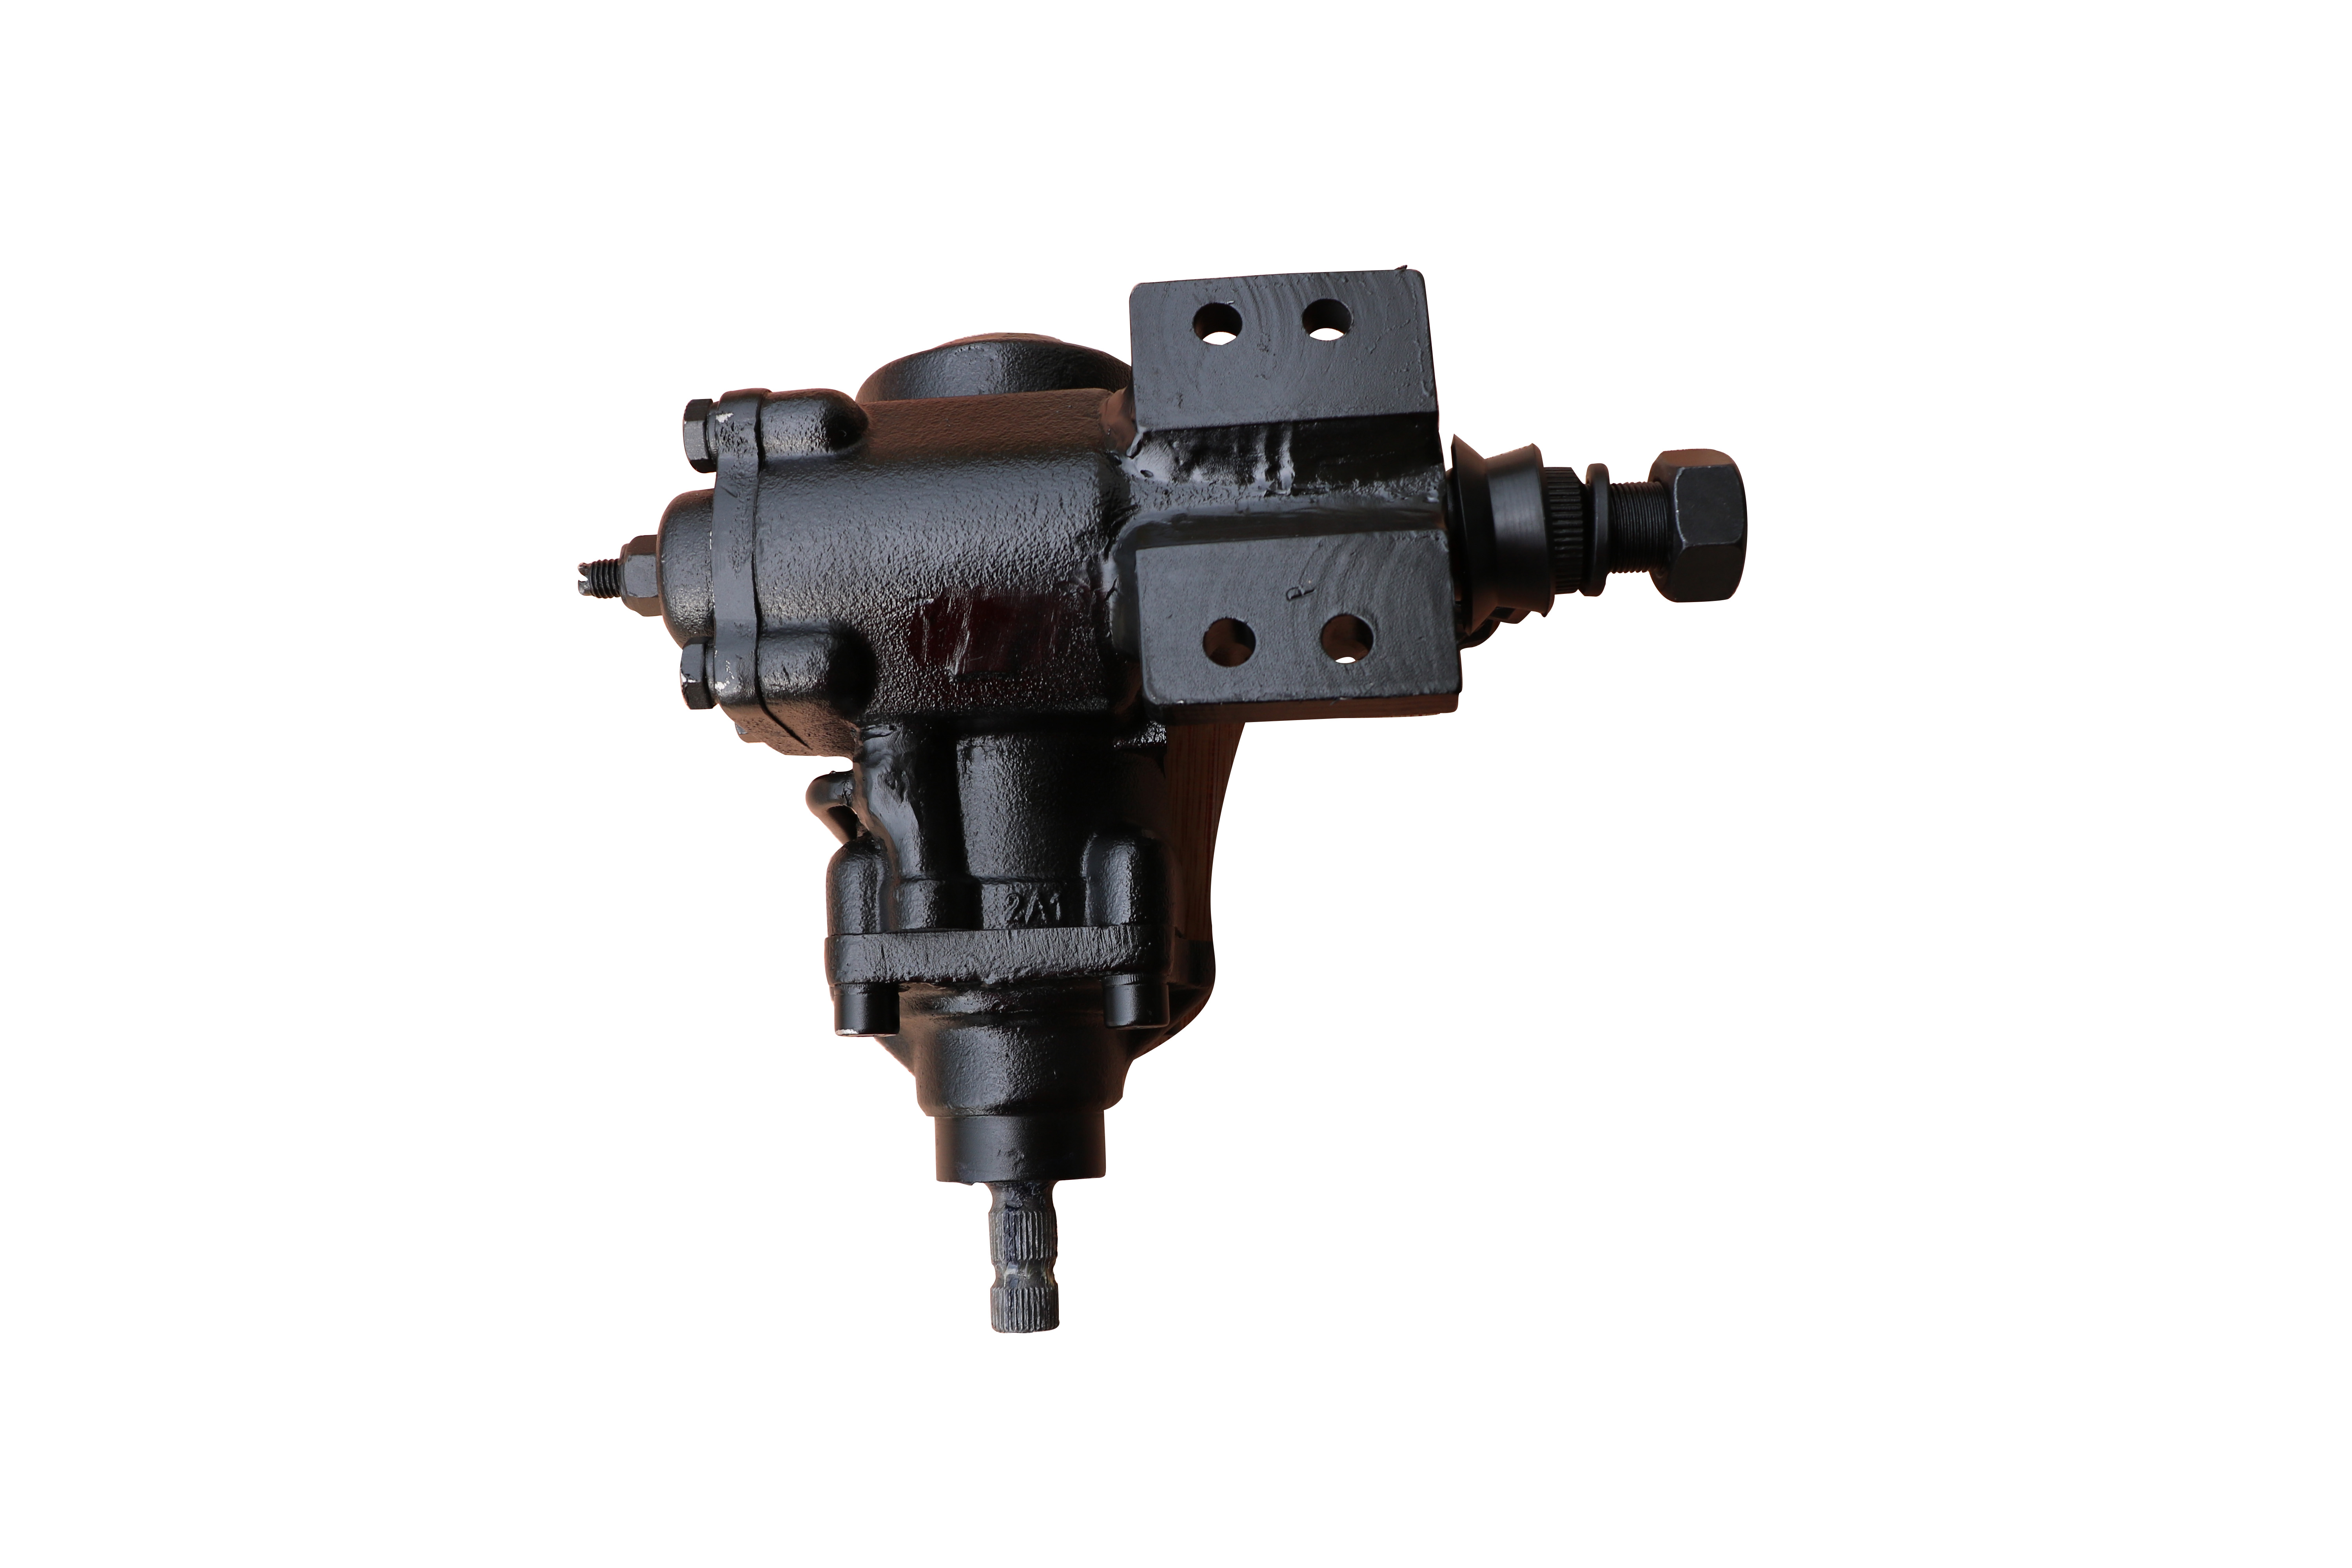 OEM 4411035170 hydraulic power steering gear for toyota LN106 LN105